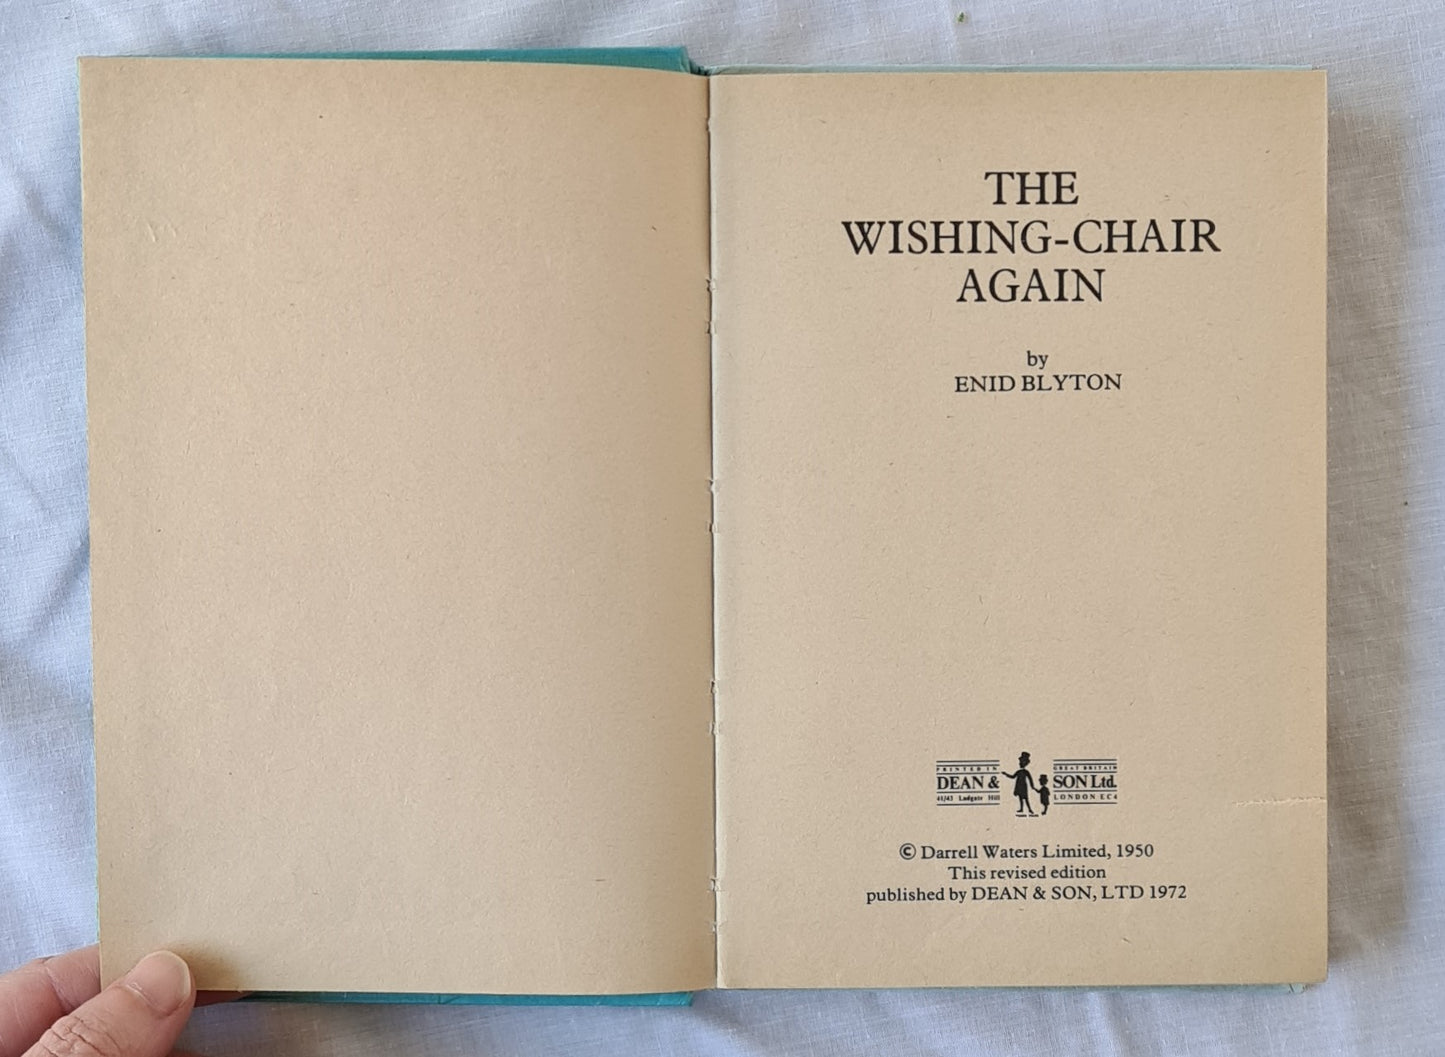 The Wishing Chair Again by Enid Blyton